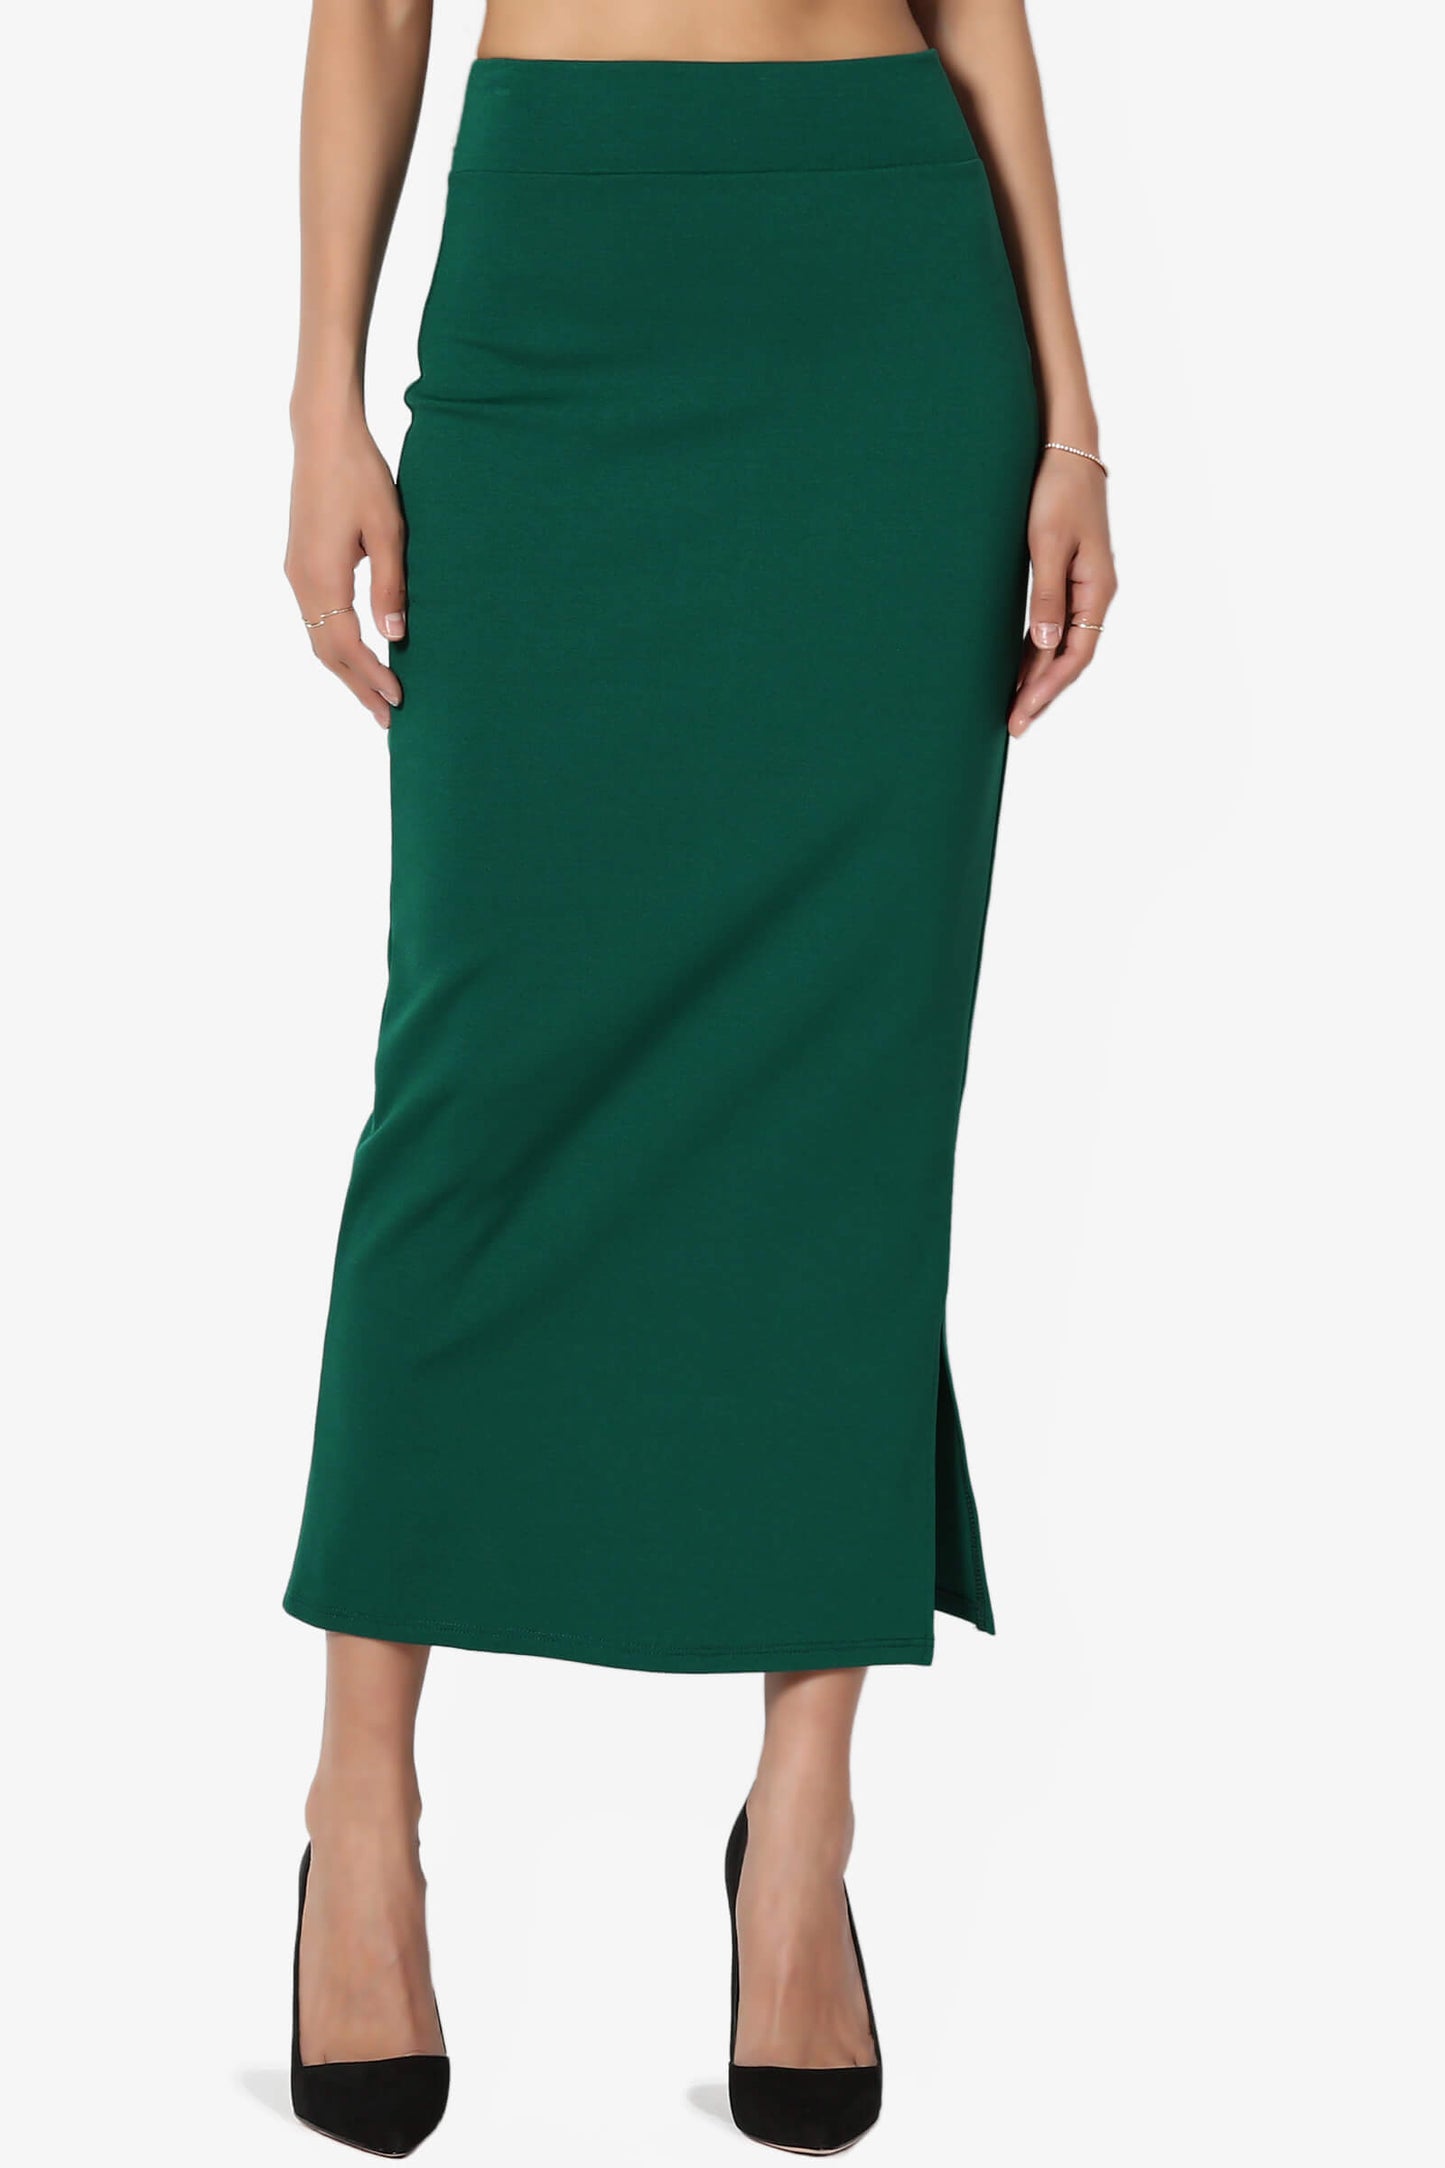 Carleta Mid Calf Pencil Skirt HUNTER GREEN_1